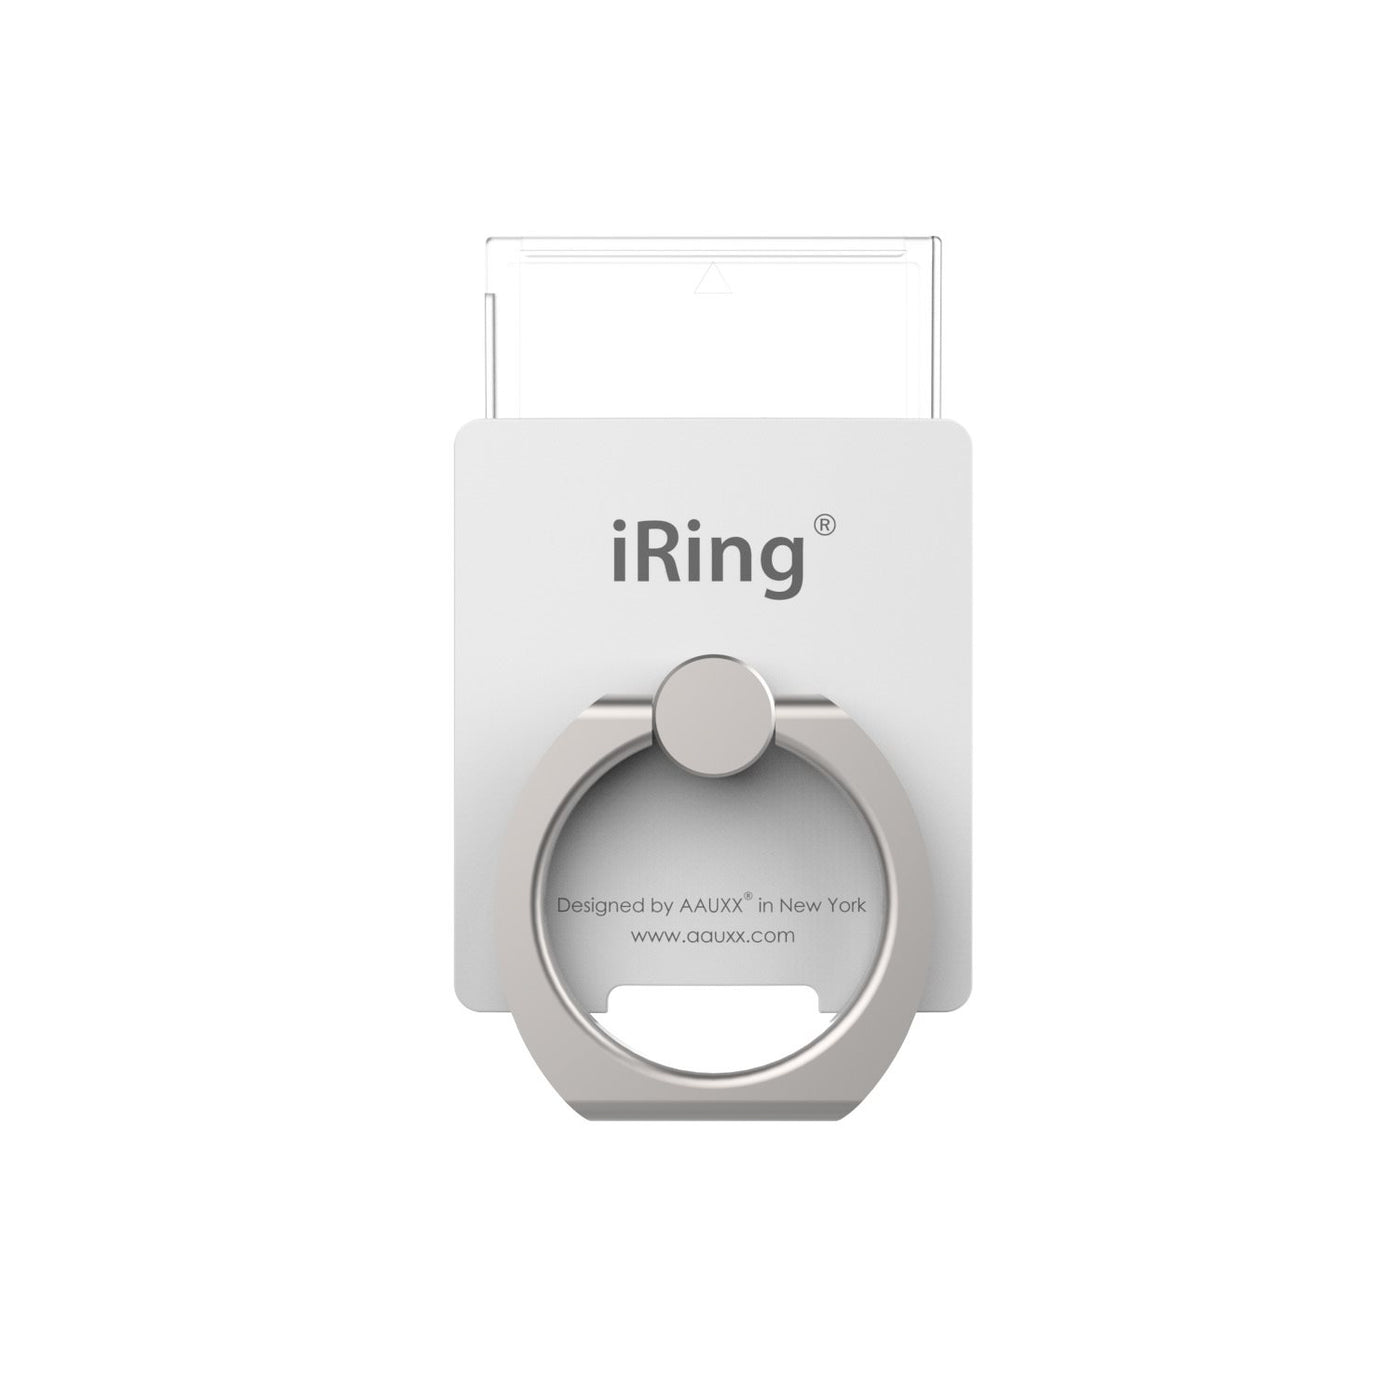 iRing Link Hook Telefonhalter - Universal